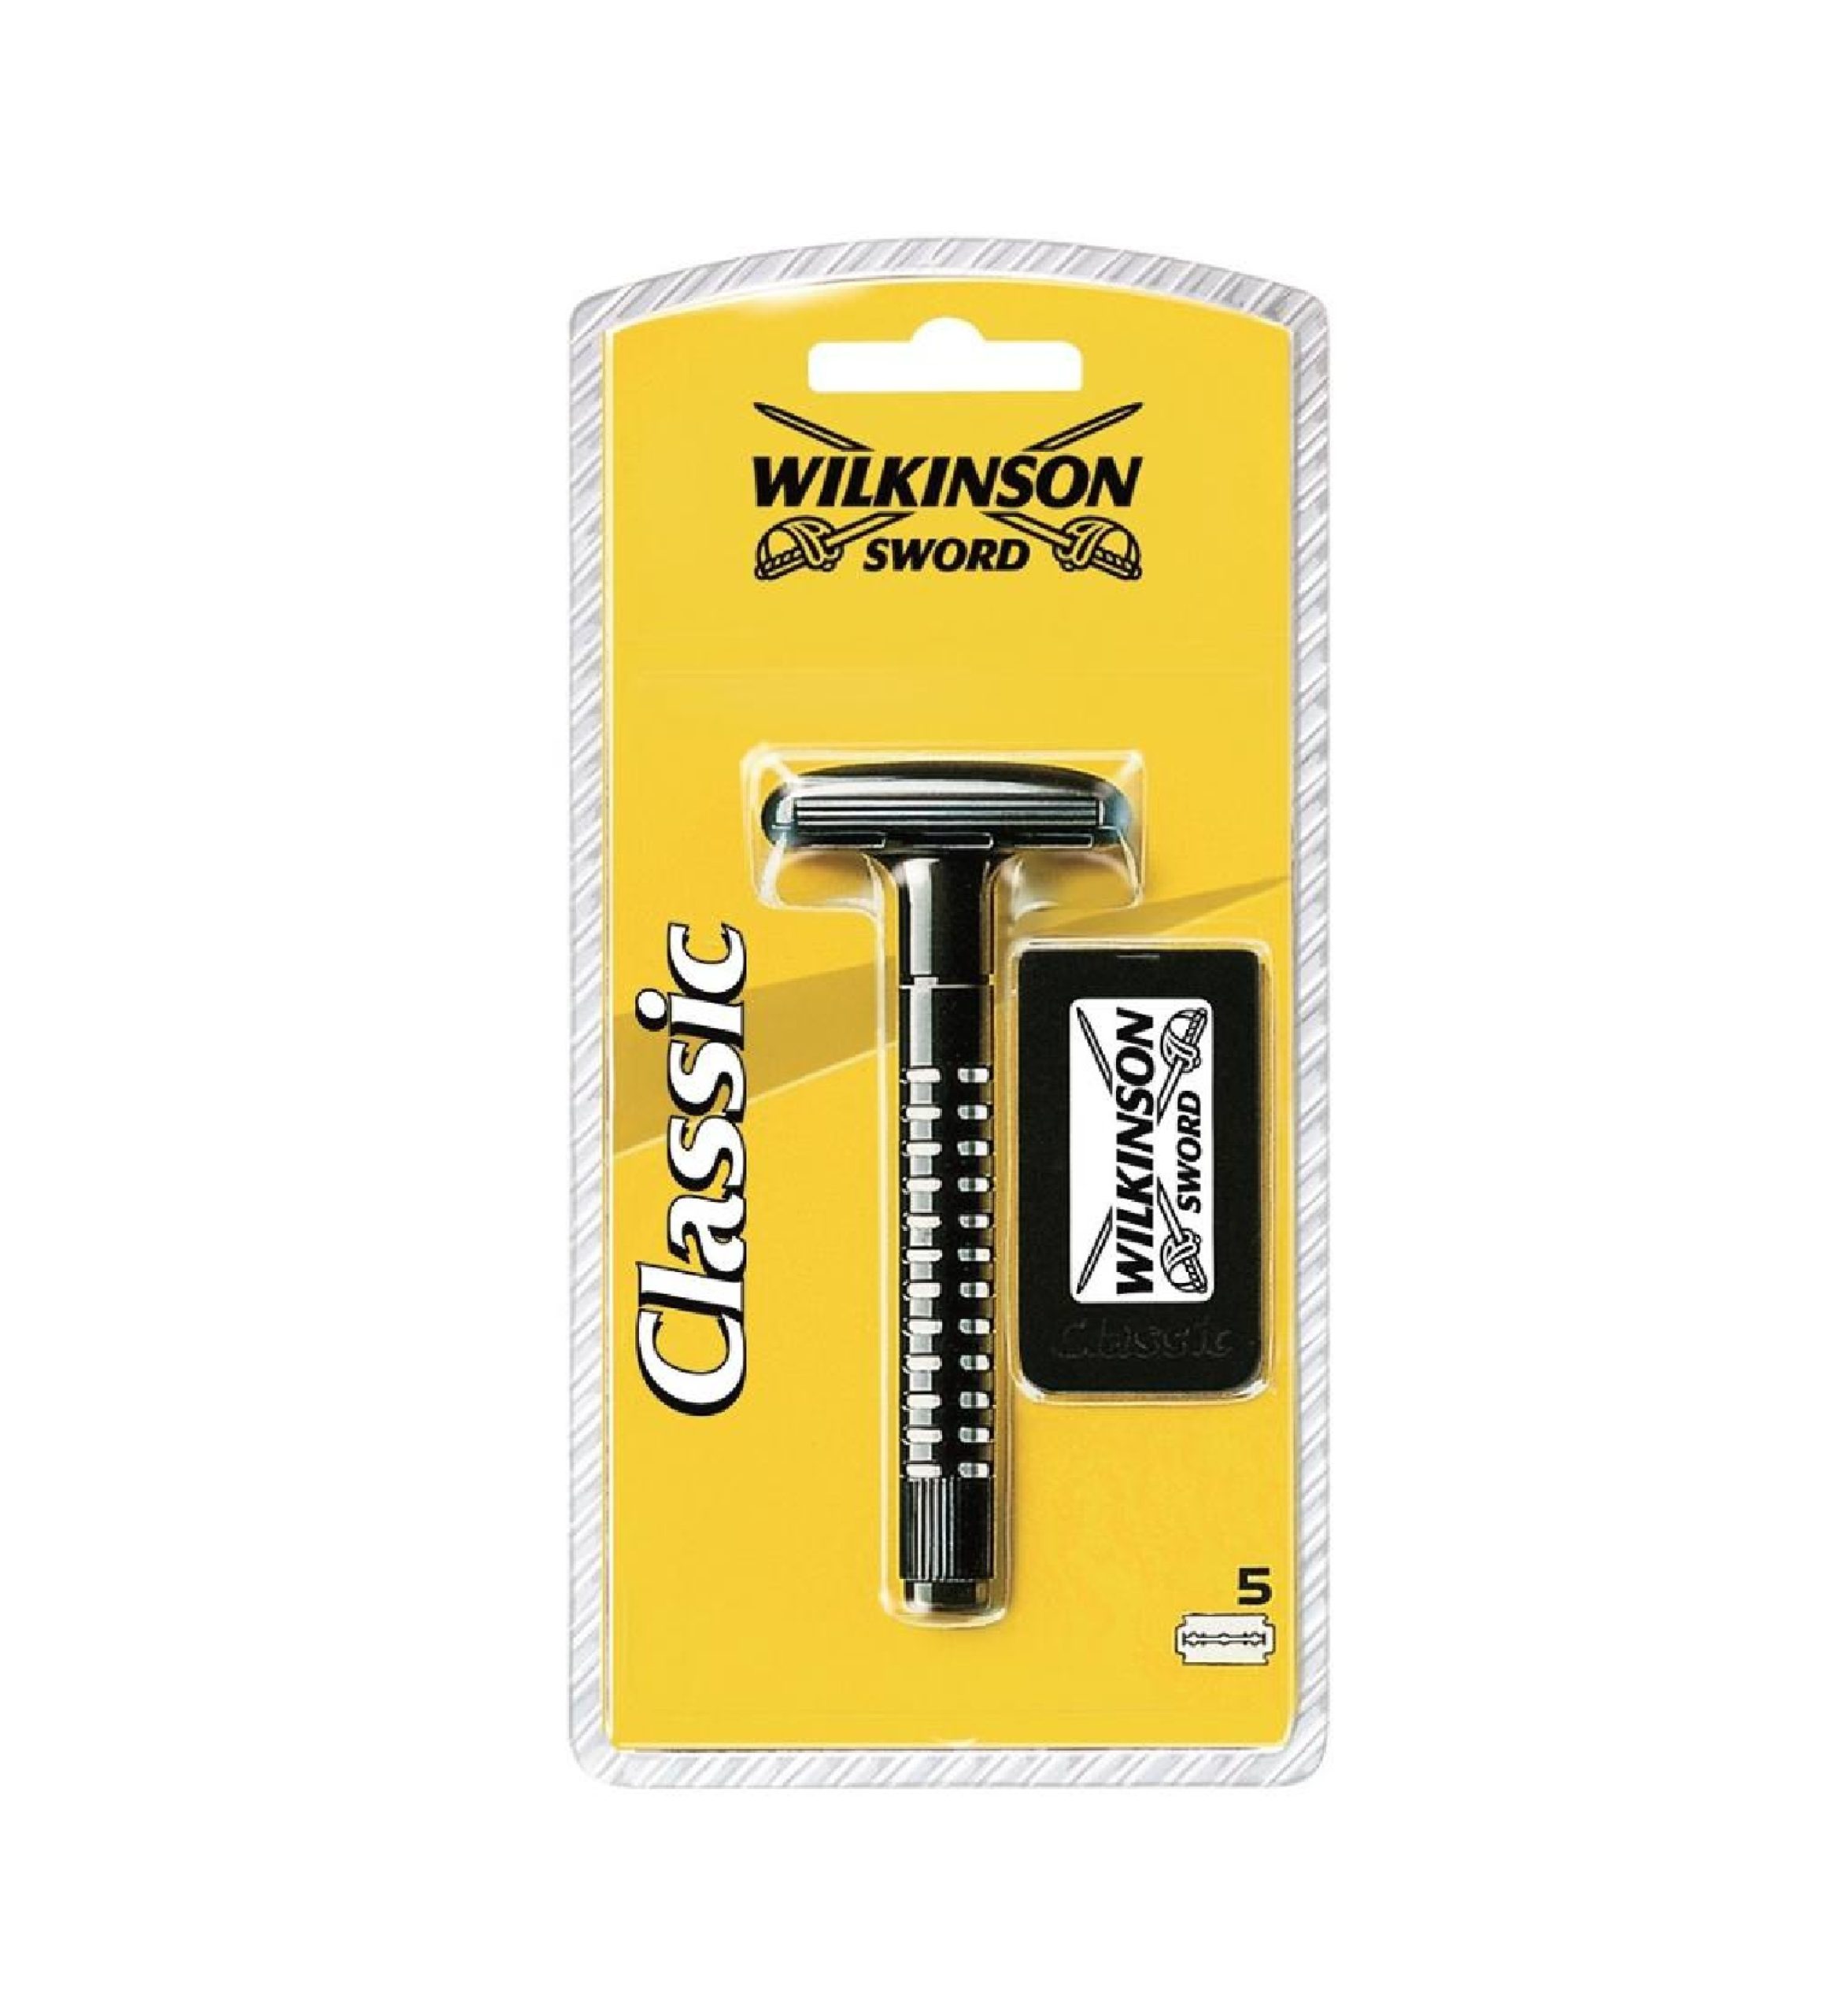 Лезвия для бритья т. Вилкинсон станок для бритья. Wilkinson Sword бритва т образная. Станок бритвенный Wilkinson Sword Classic. Wilkinson Sword Classic бритвенный "т"-образный станок.